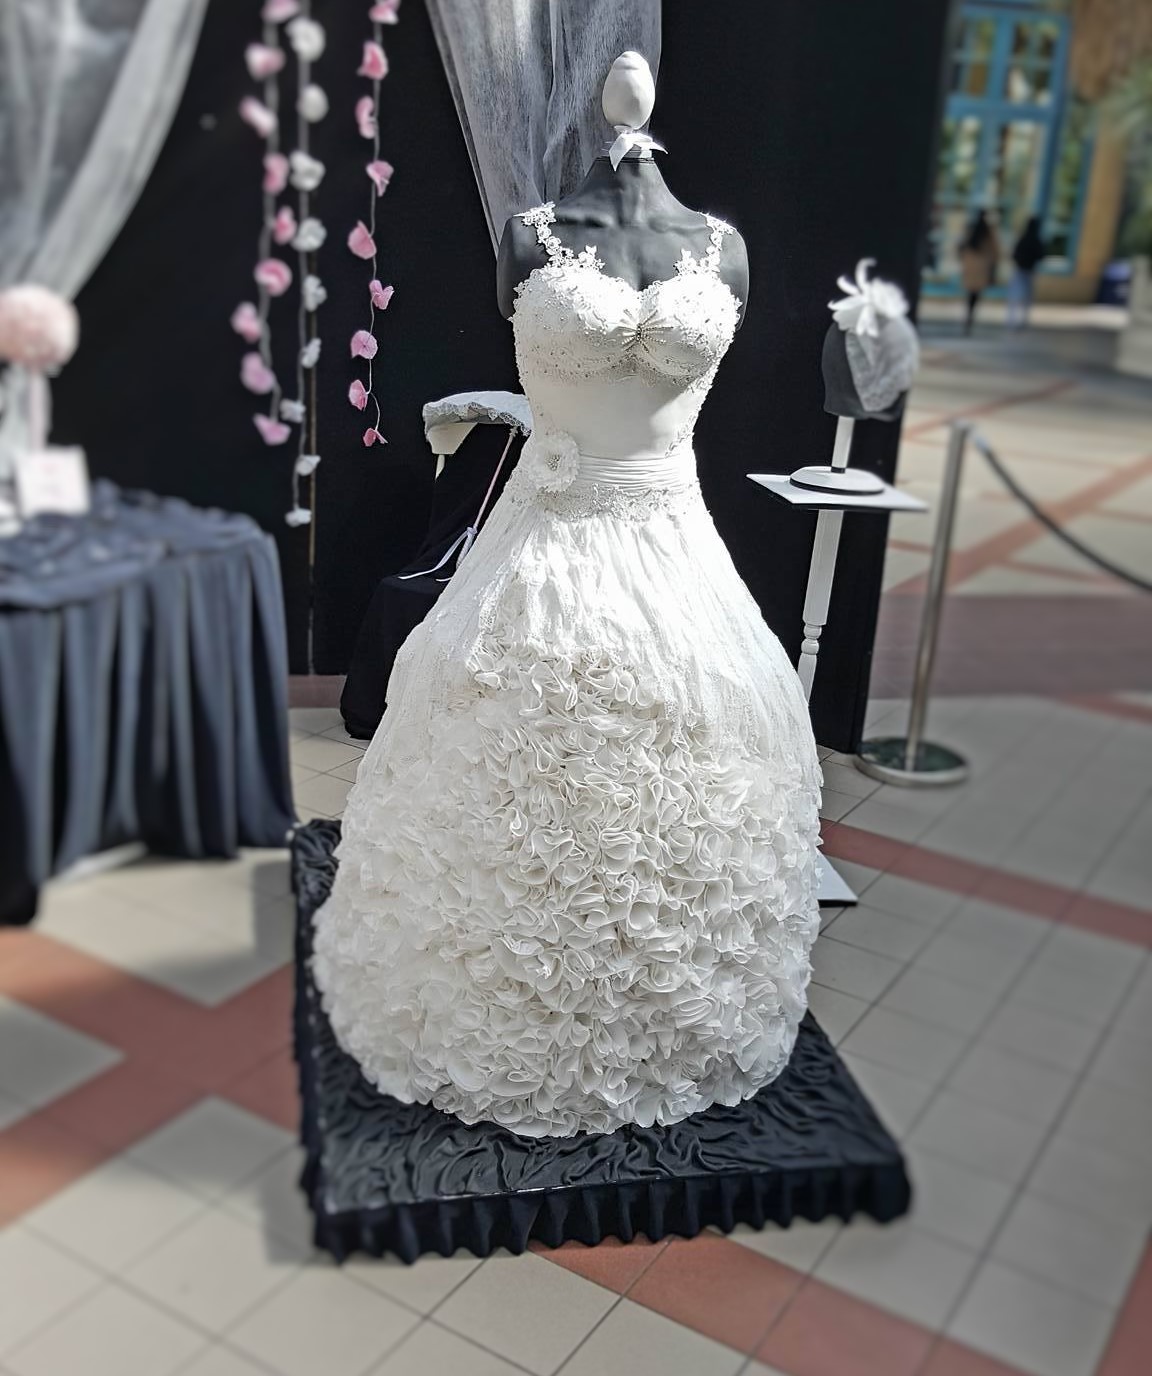 Wedding Cake Inspiration - Wedding Dress